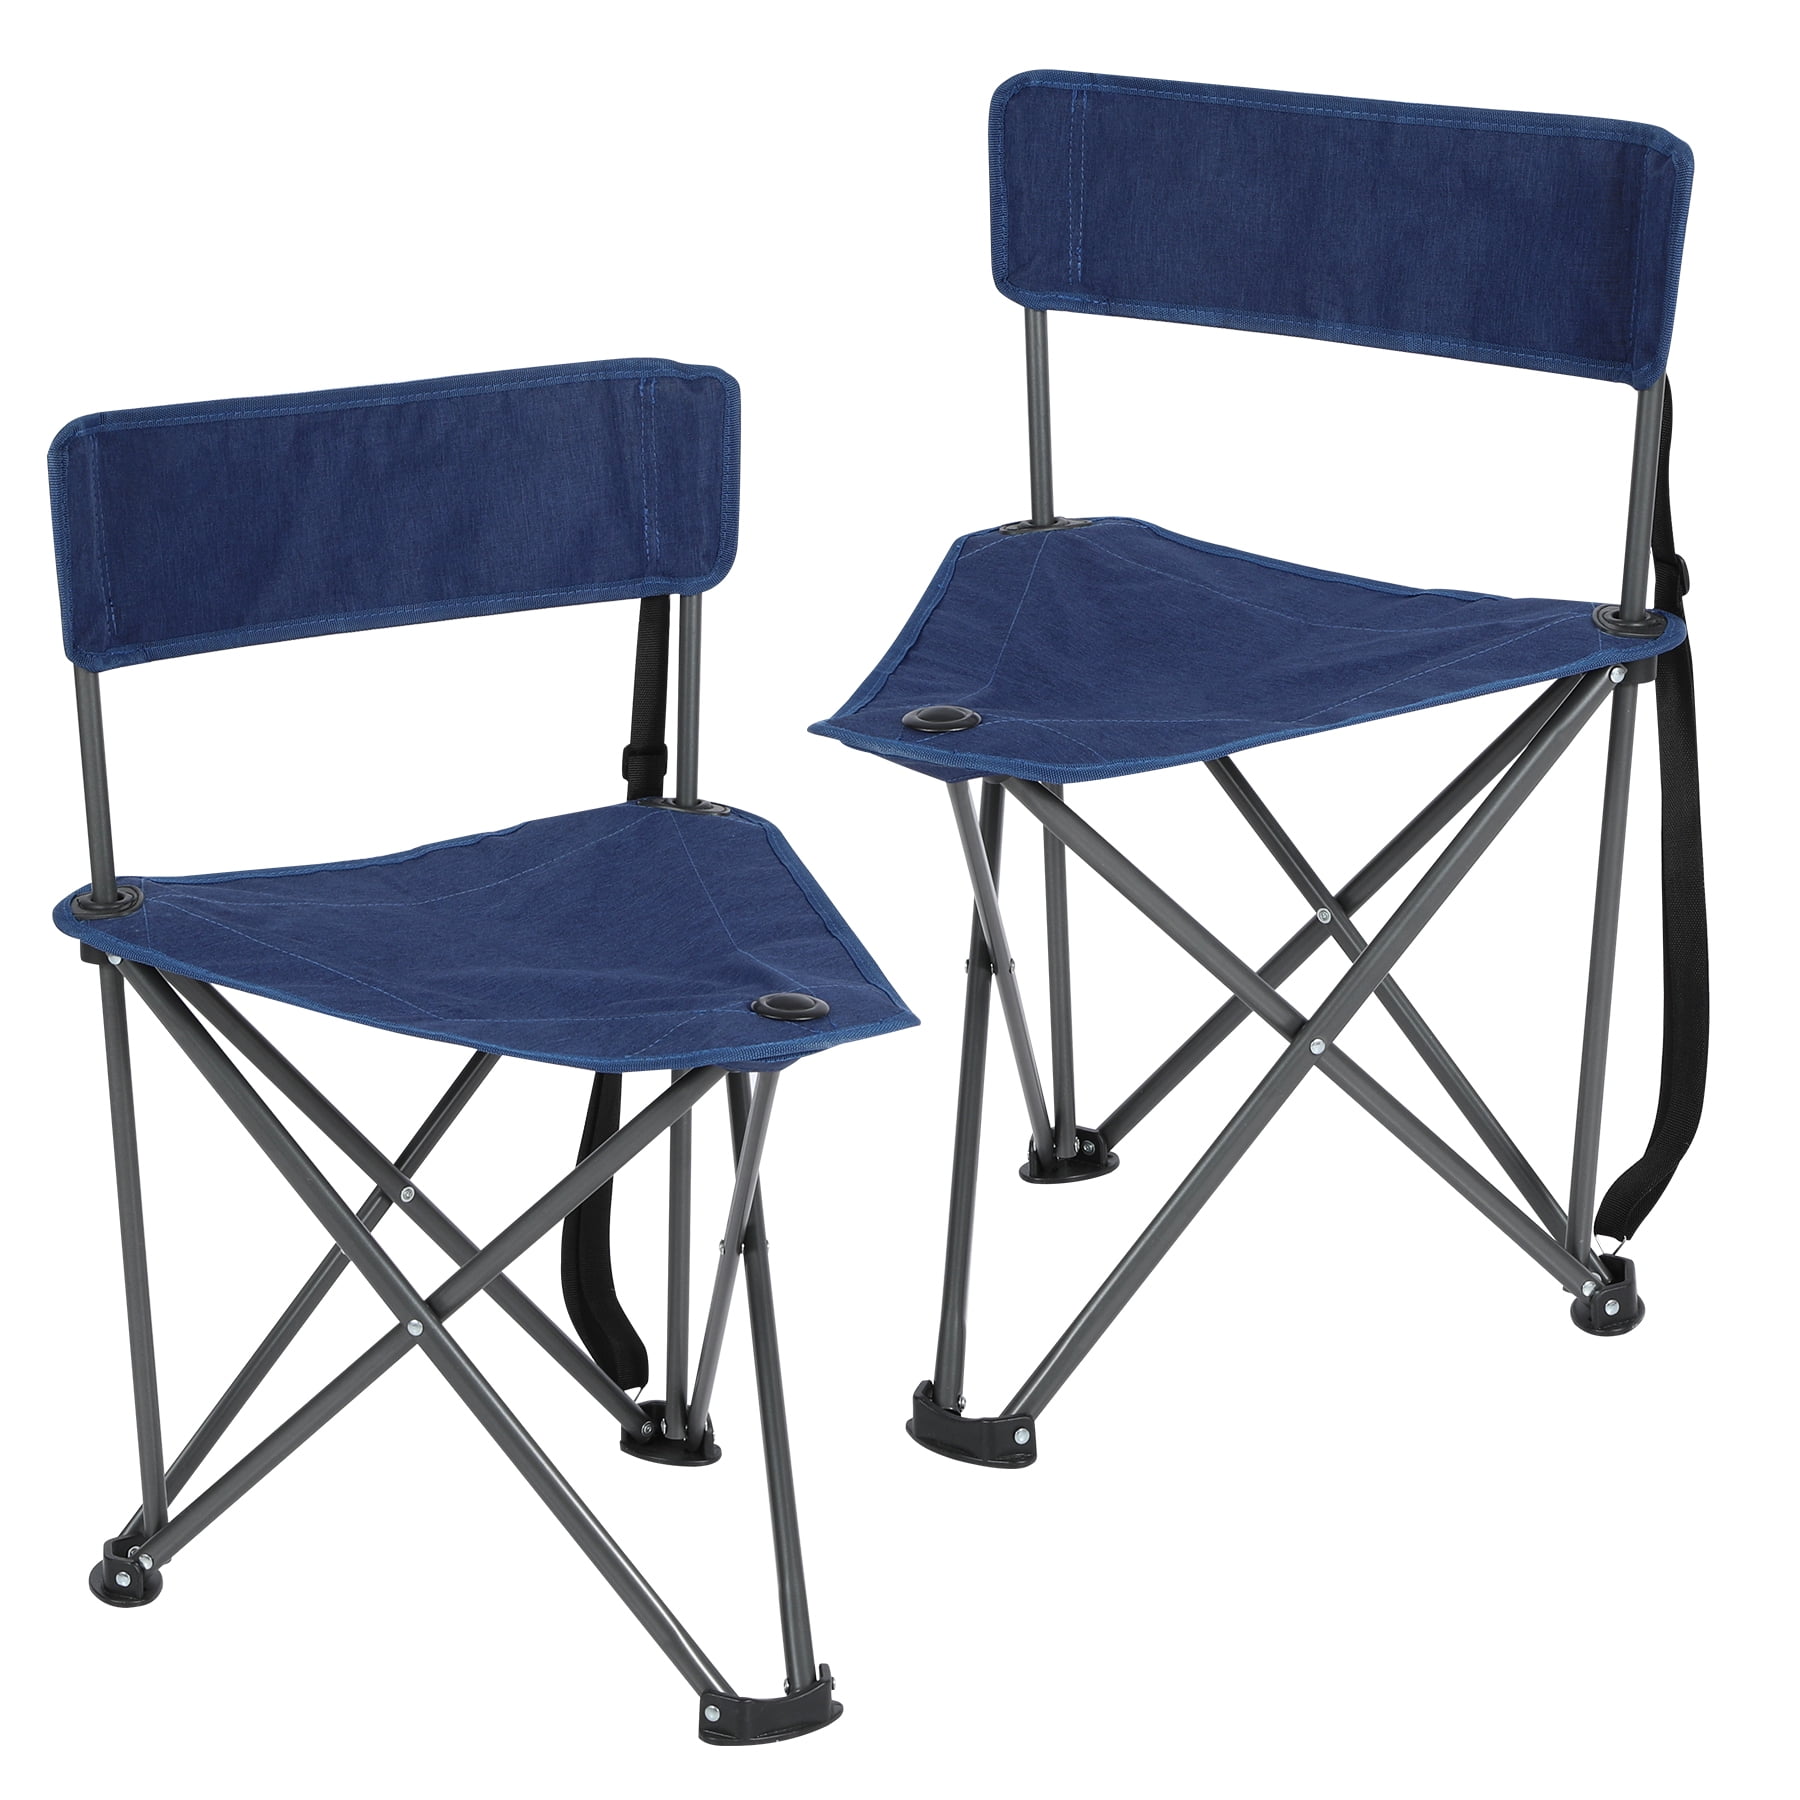 REDCAMP 2-Pack Tripod Chairs Folding, Lightweight Portable Tripod